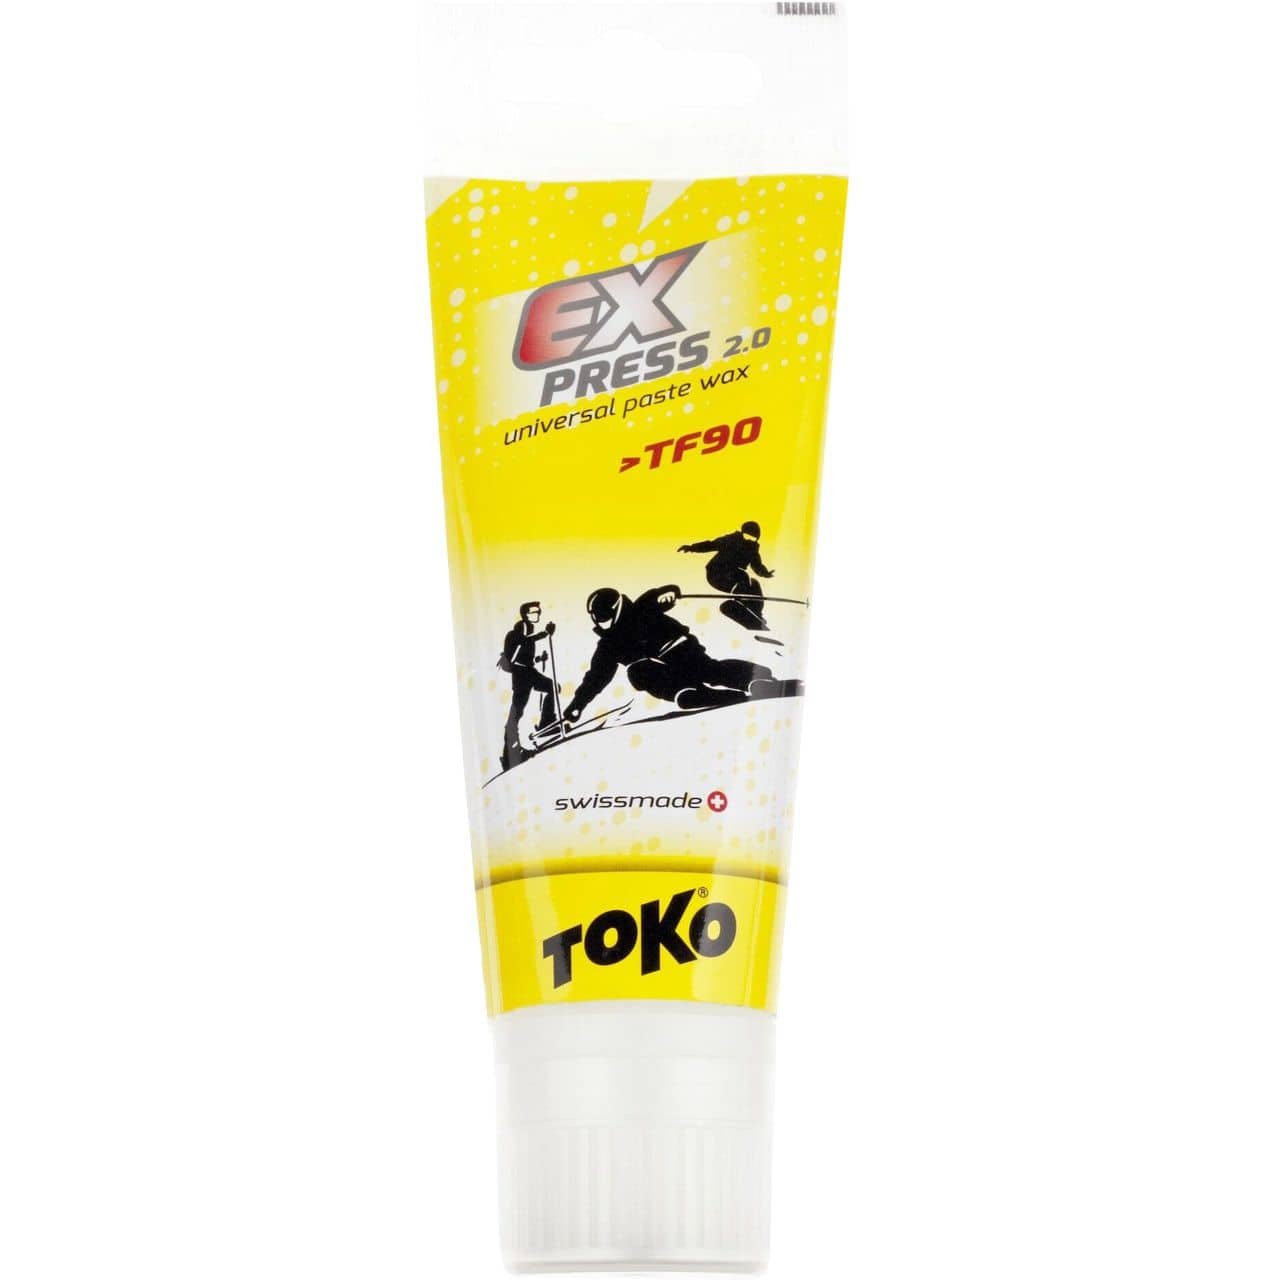 Toko Express Paste Wax 75ml von TOKO